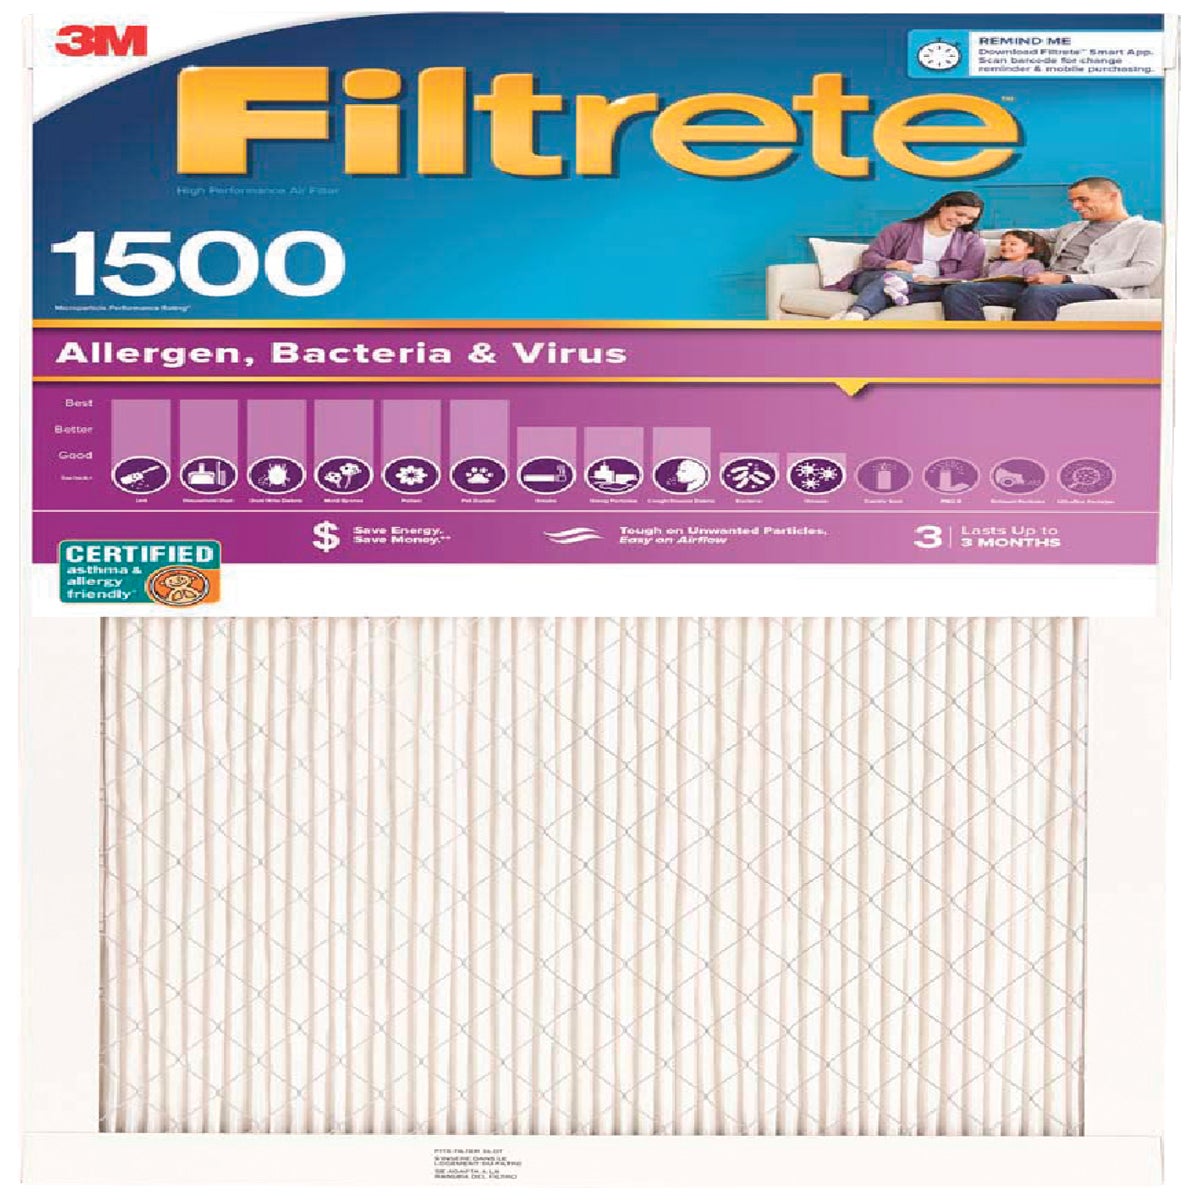 UP11-4 Filtrete Ultra Allergen Healthy LiviIng Furnace Filter Image